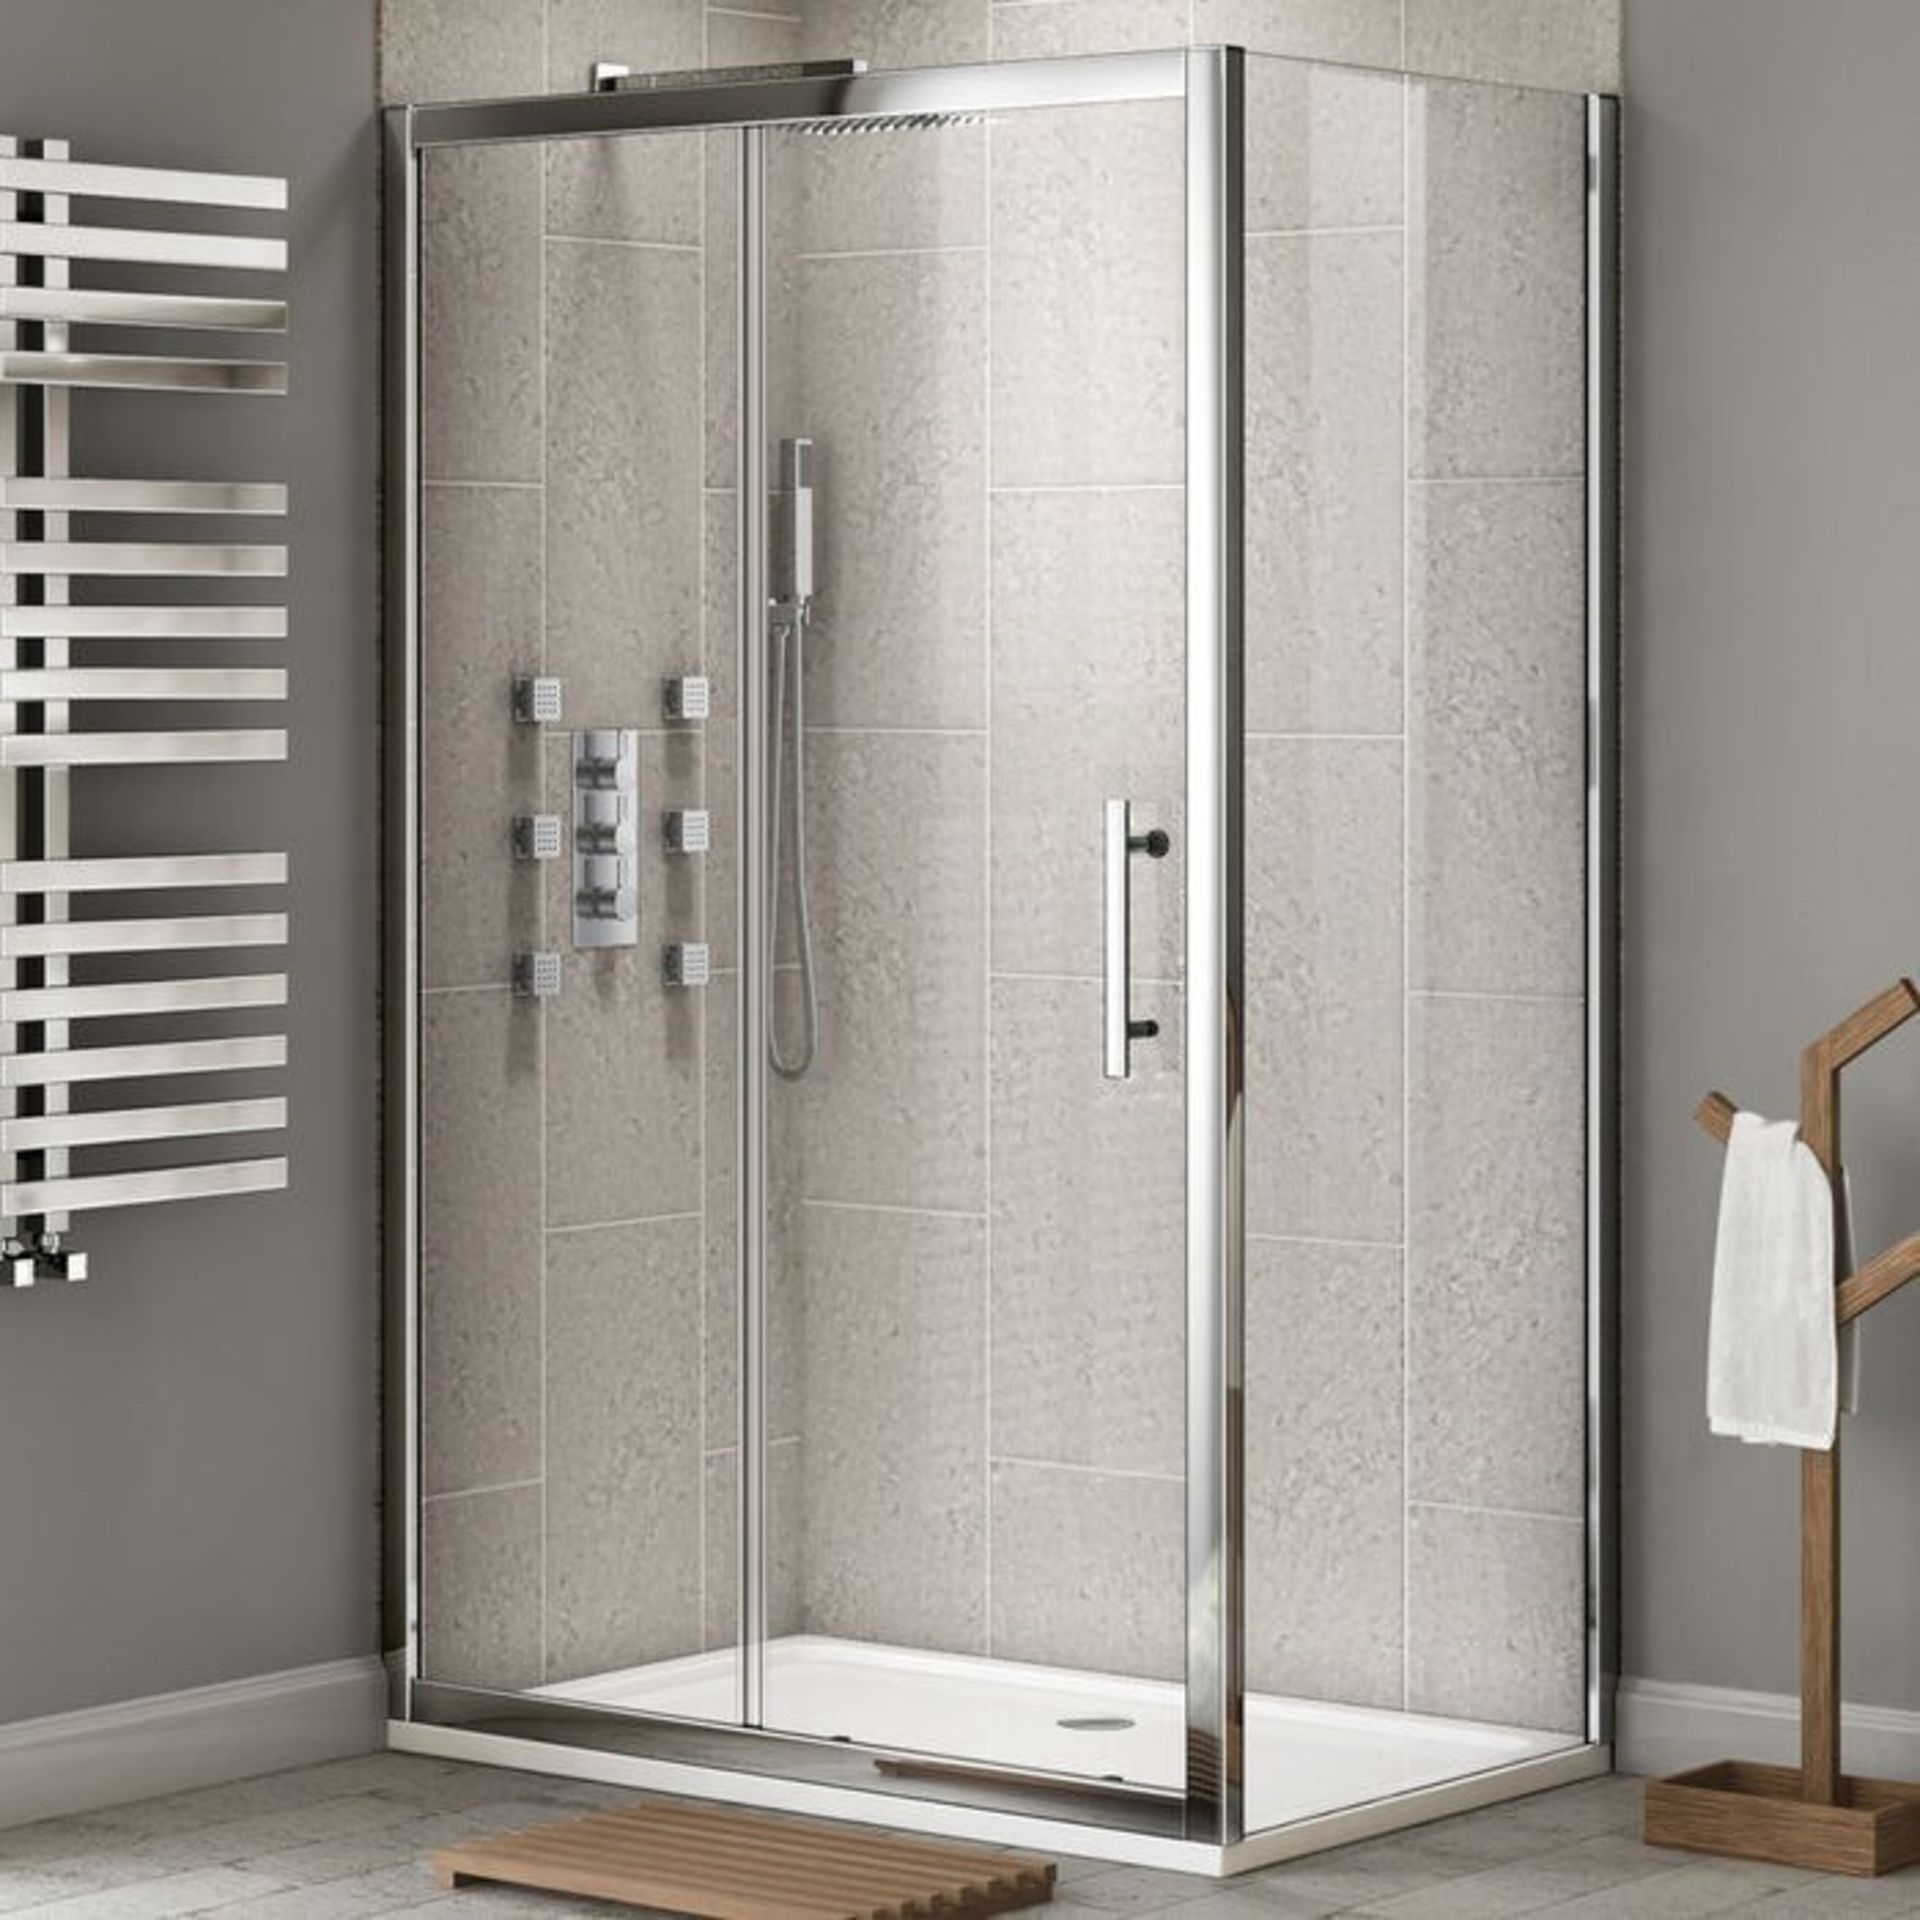 Twyfords 1700x900mm - Premium EasyClean Sliding Door Shower Enclosure. RRP £549.99.8mm EasyCl... - Image 4 of 5